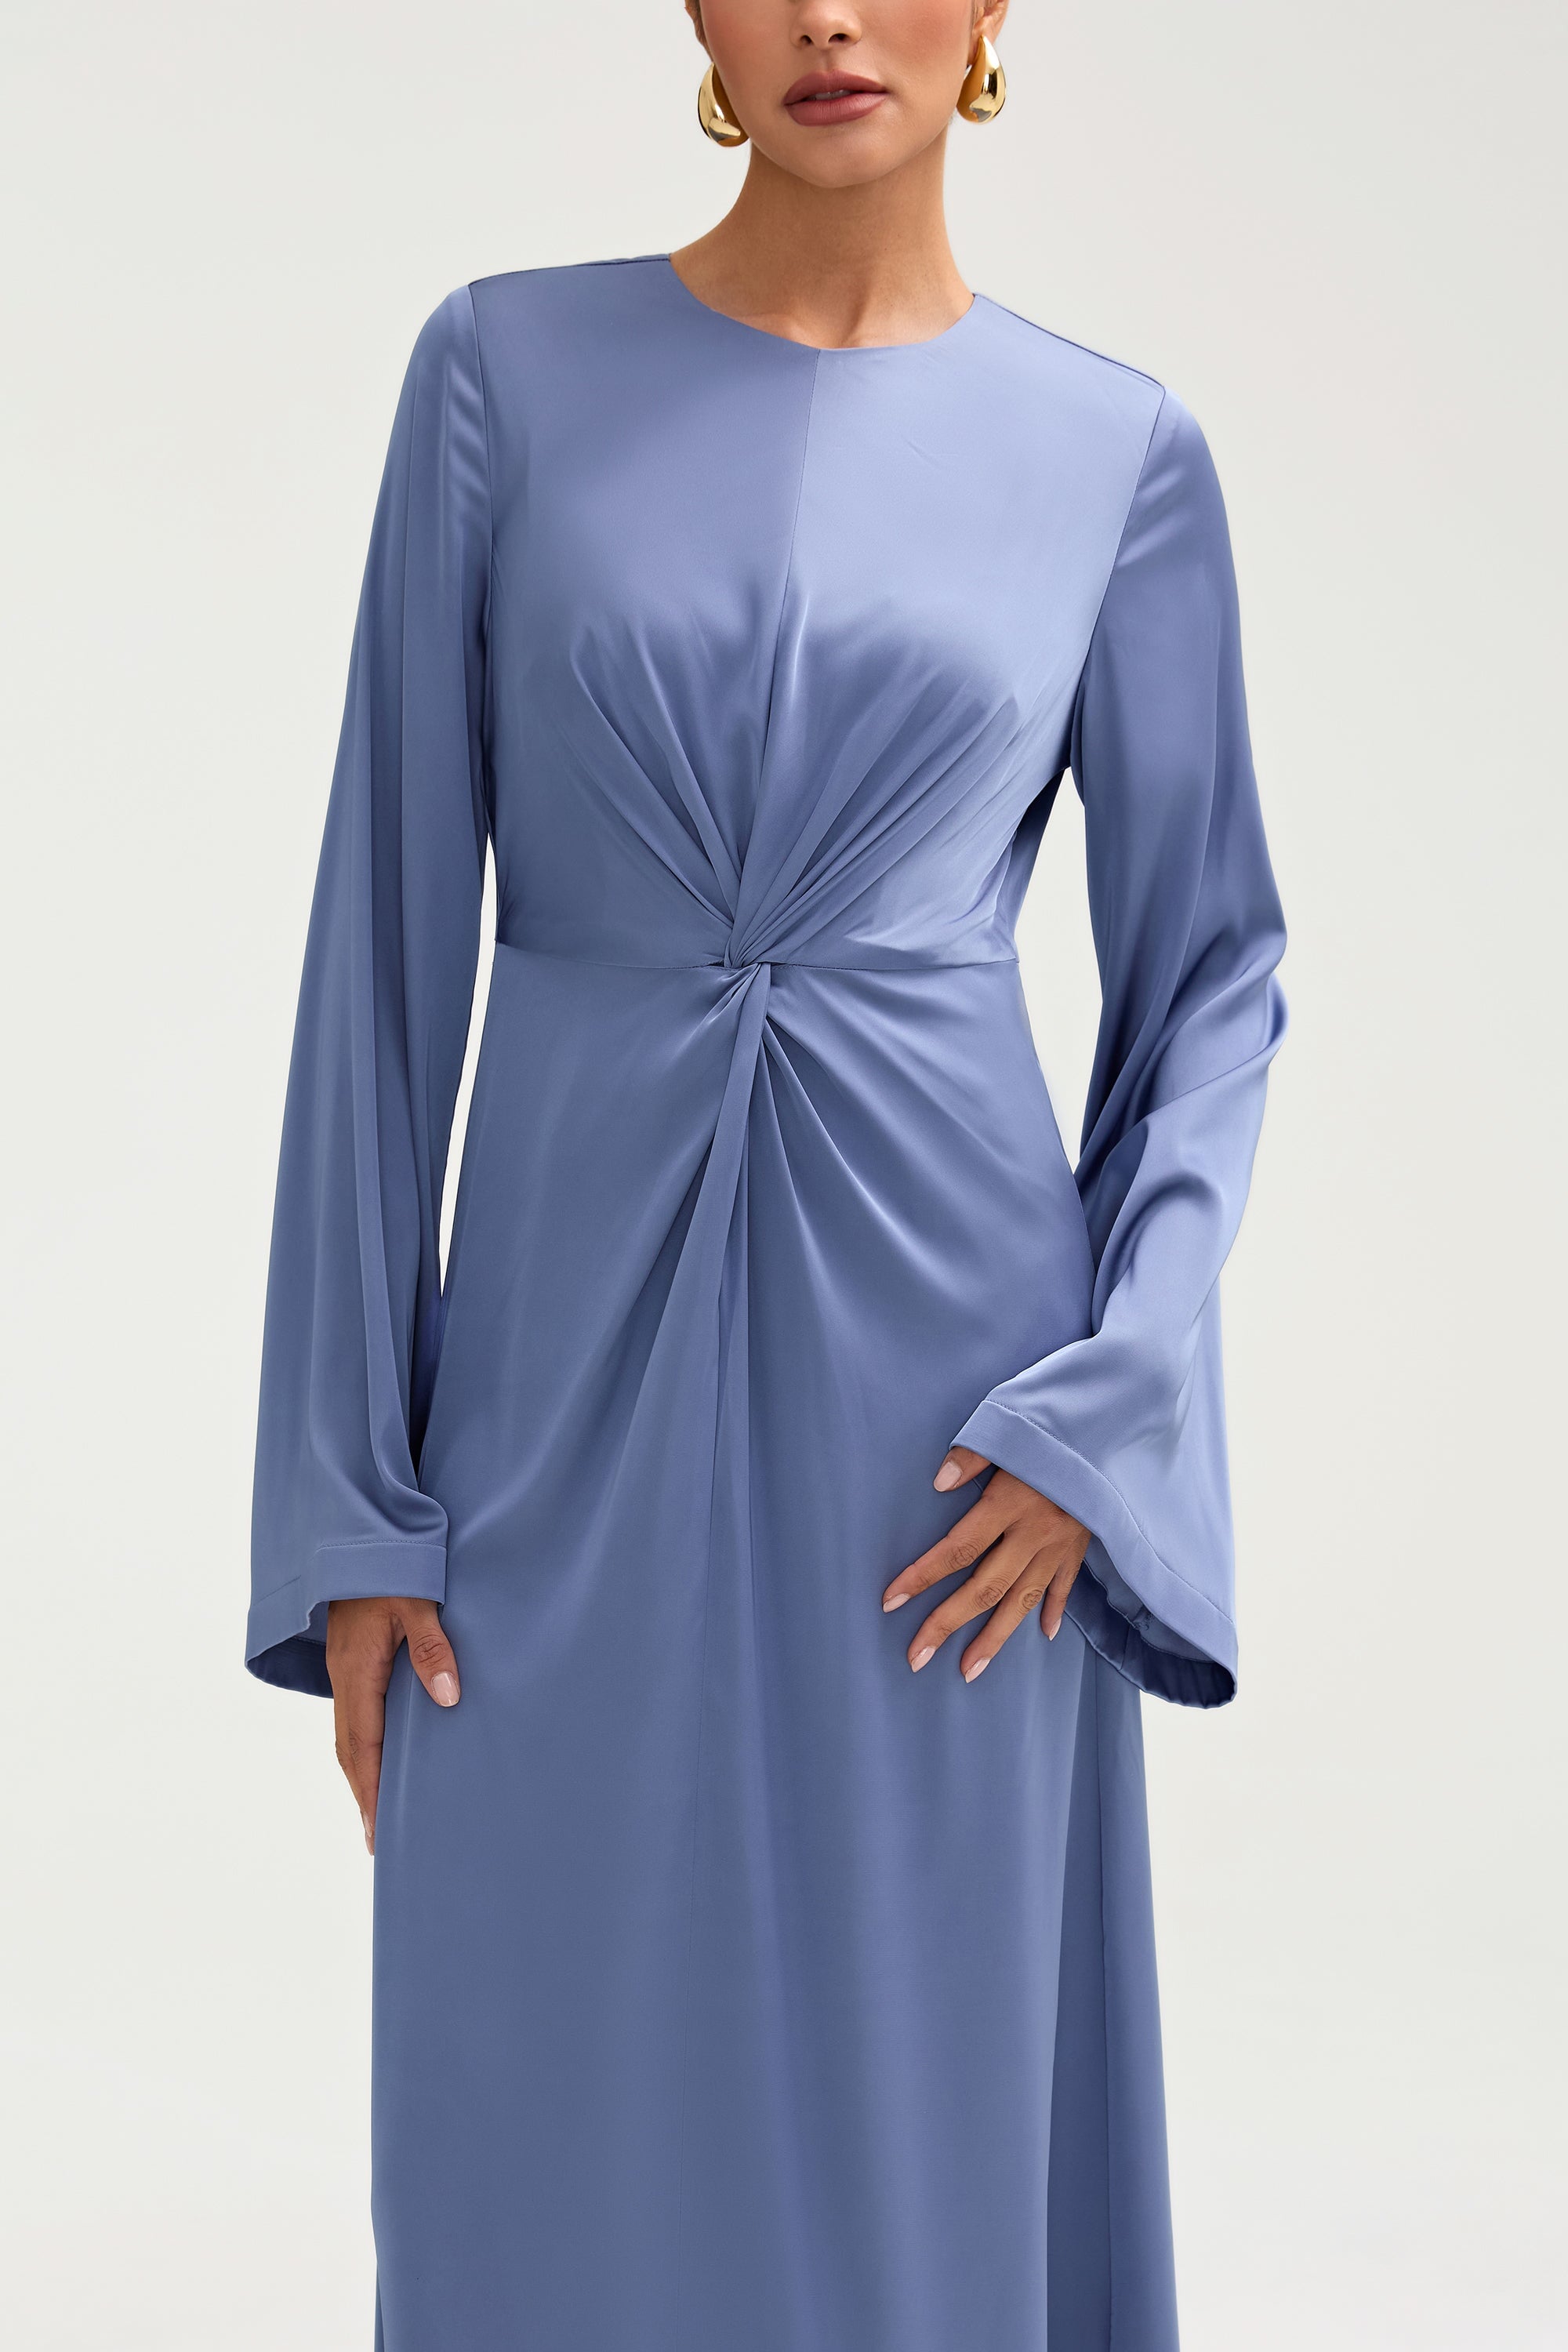 Duha Satin Twist Front Maxi Dress - Dusty Blue Clothing Veiled 